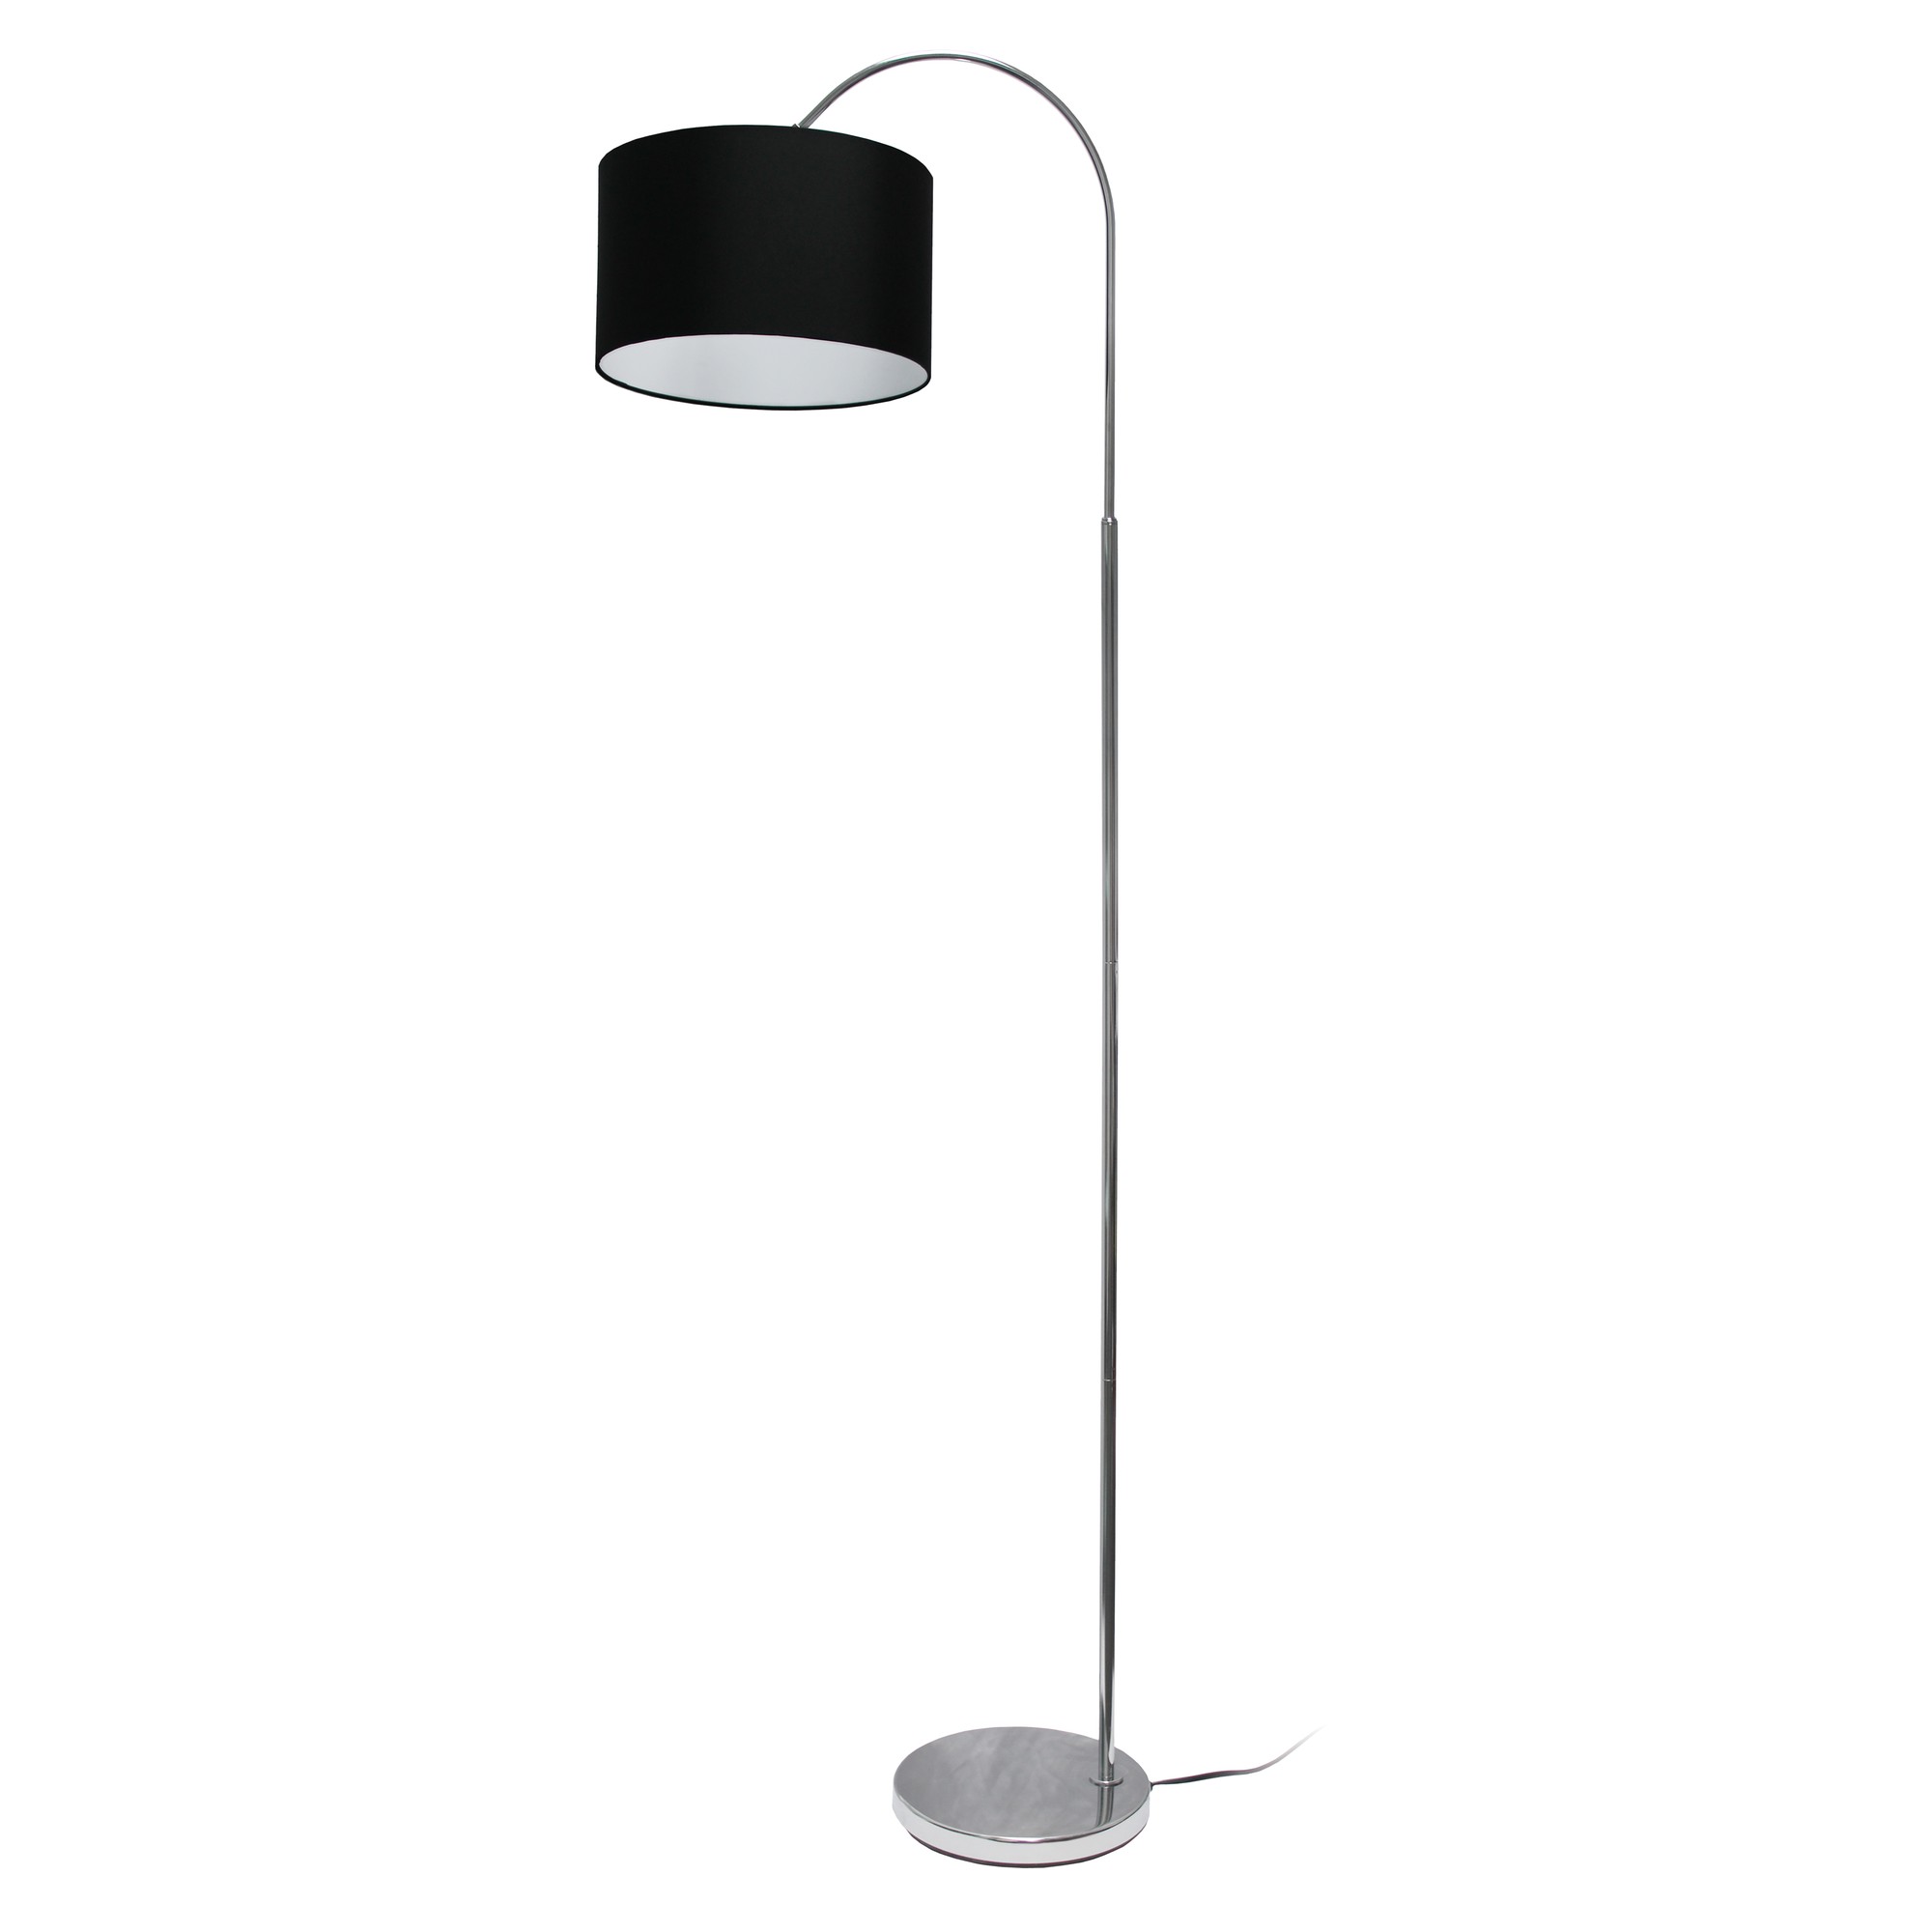 Simple Designs Arched Brushed Nickel Floor Lamp, Black Shade